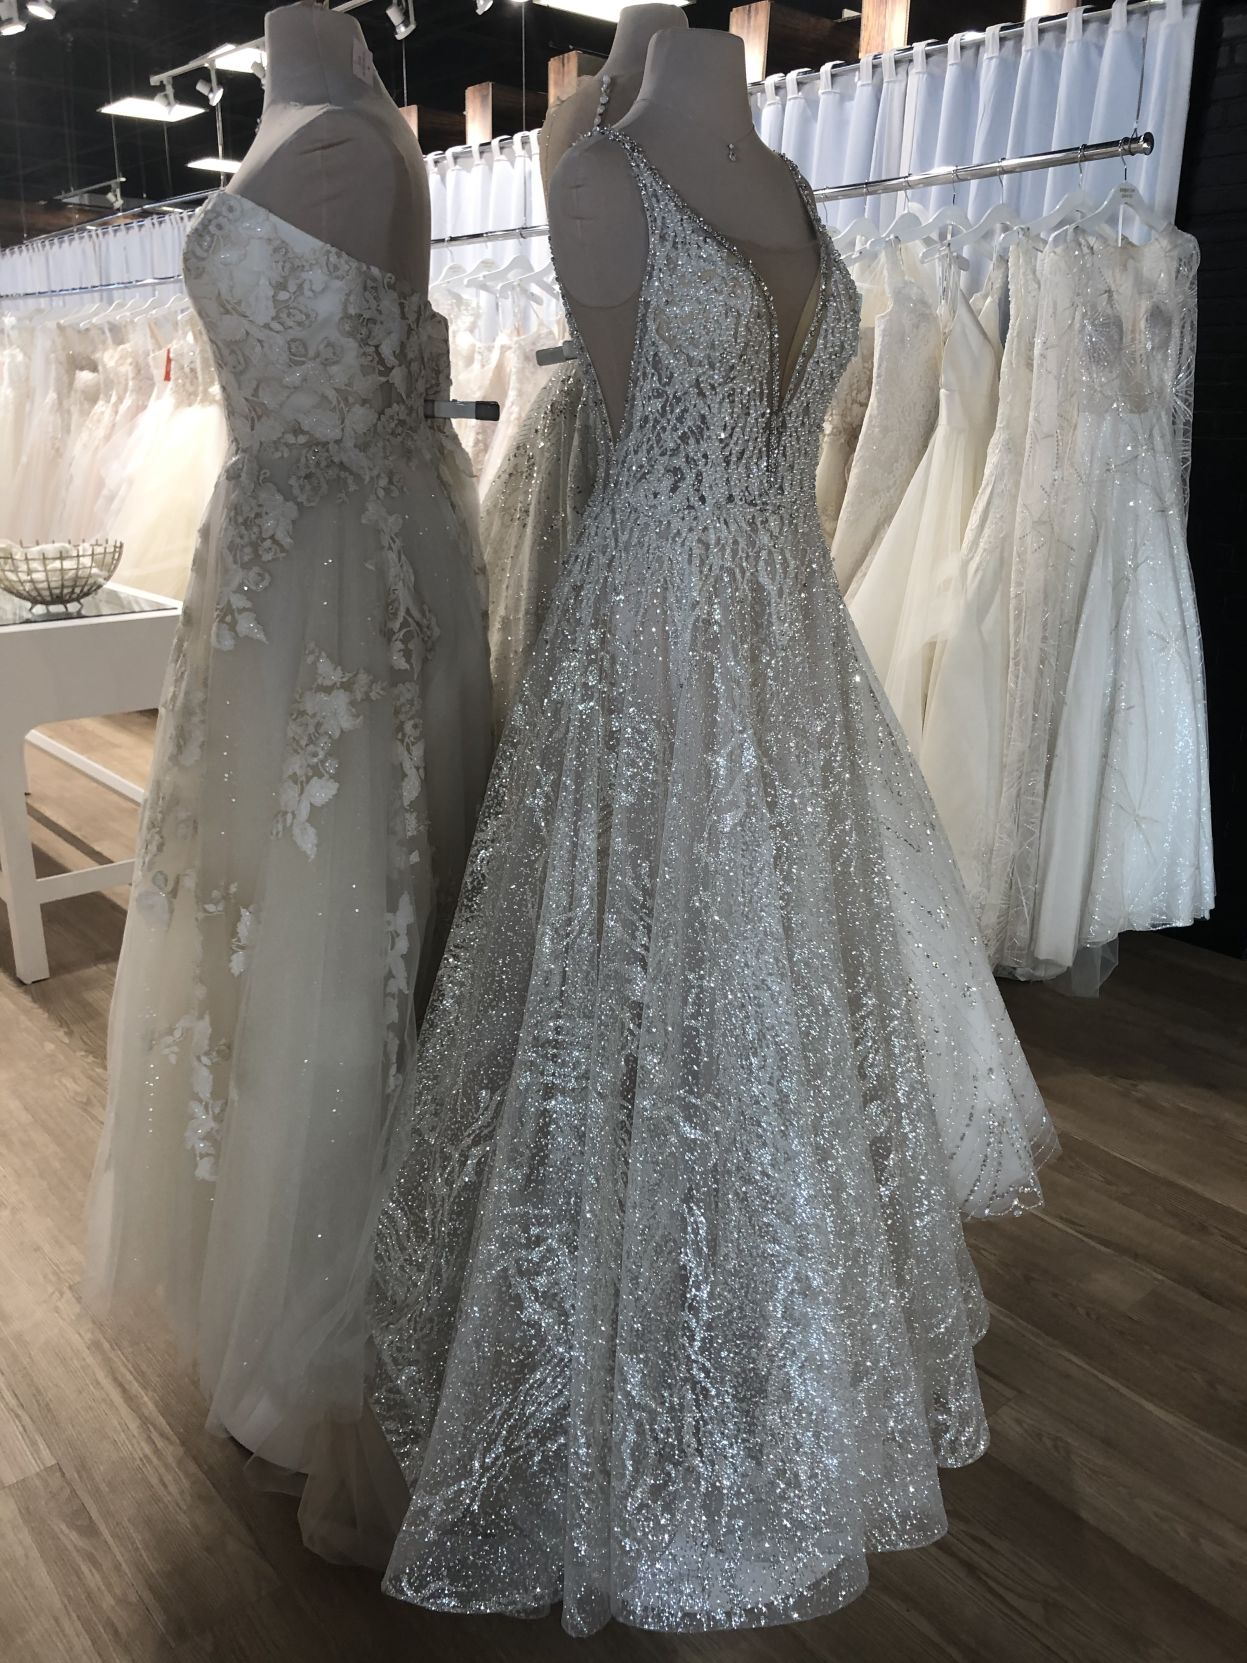 bridal entourage gowns